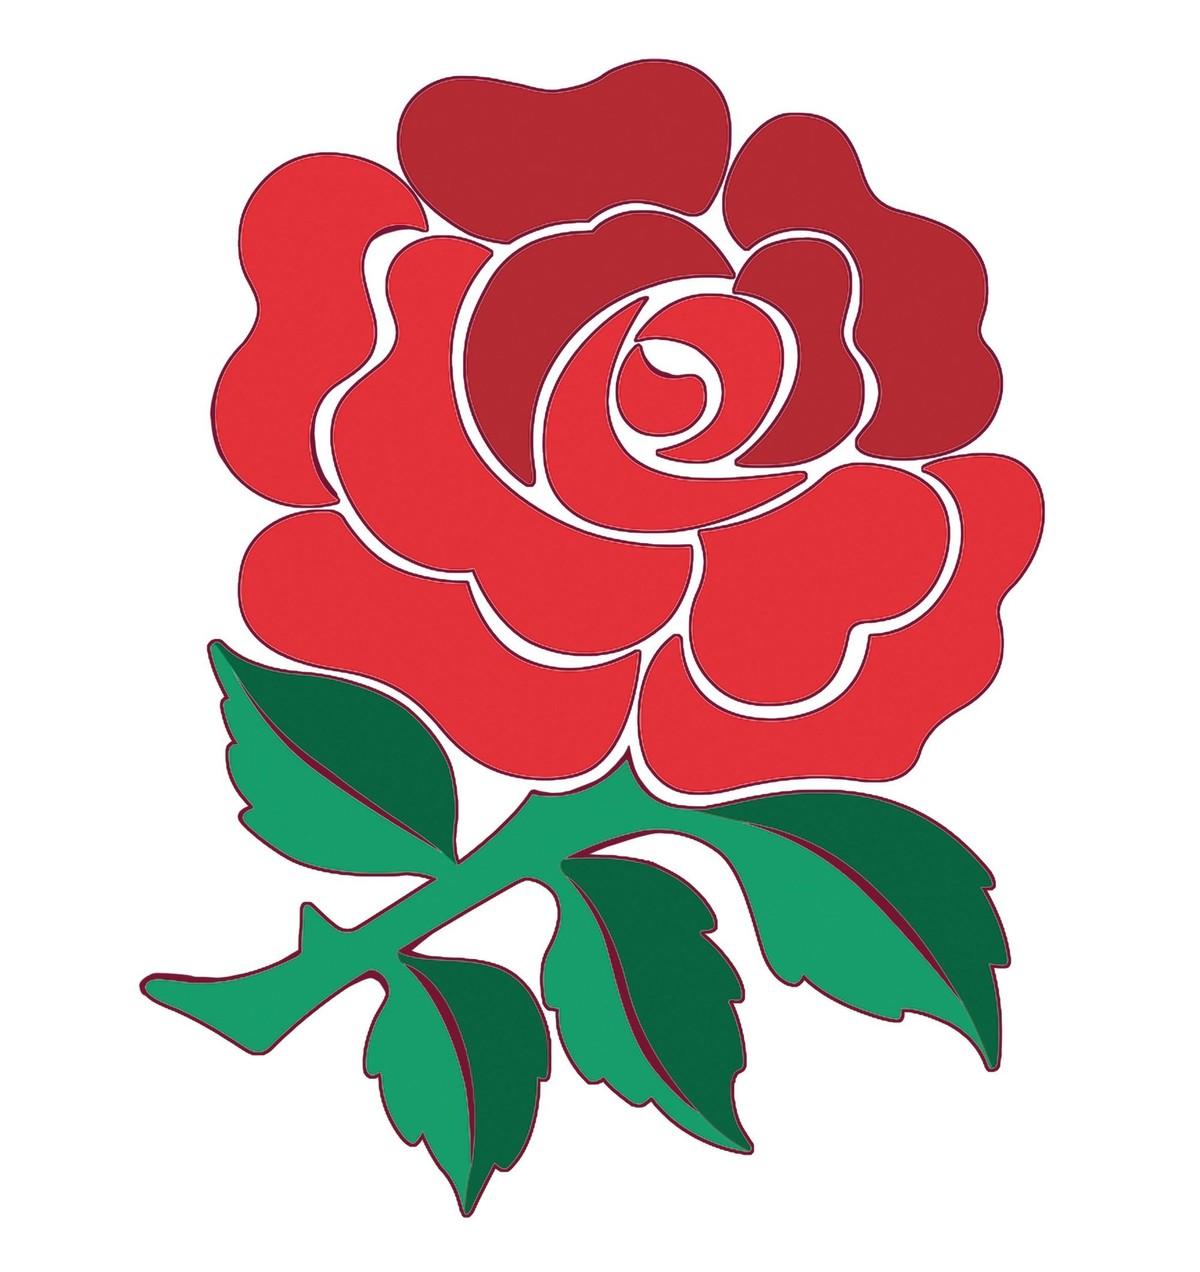 Rugby team emblem, a rose